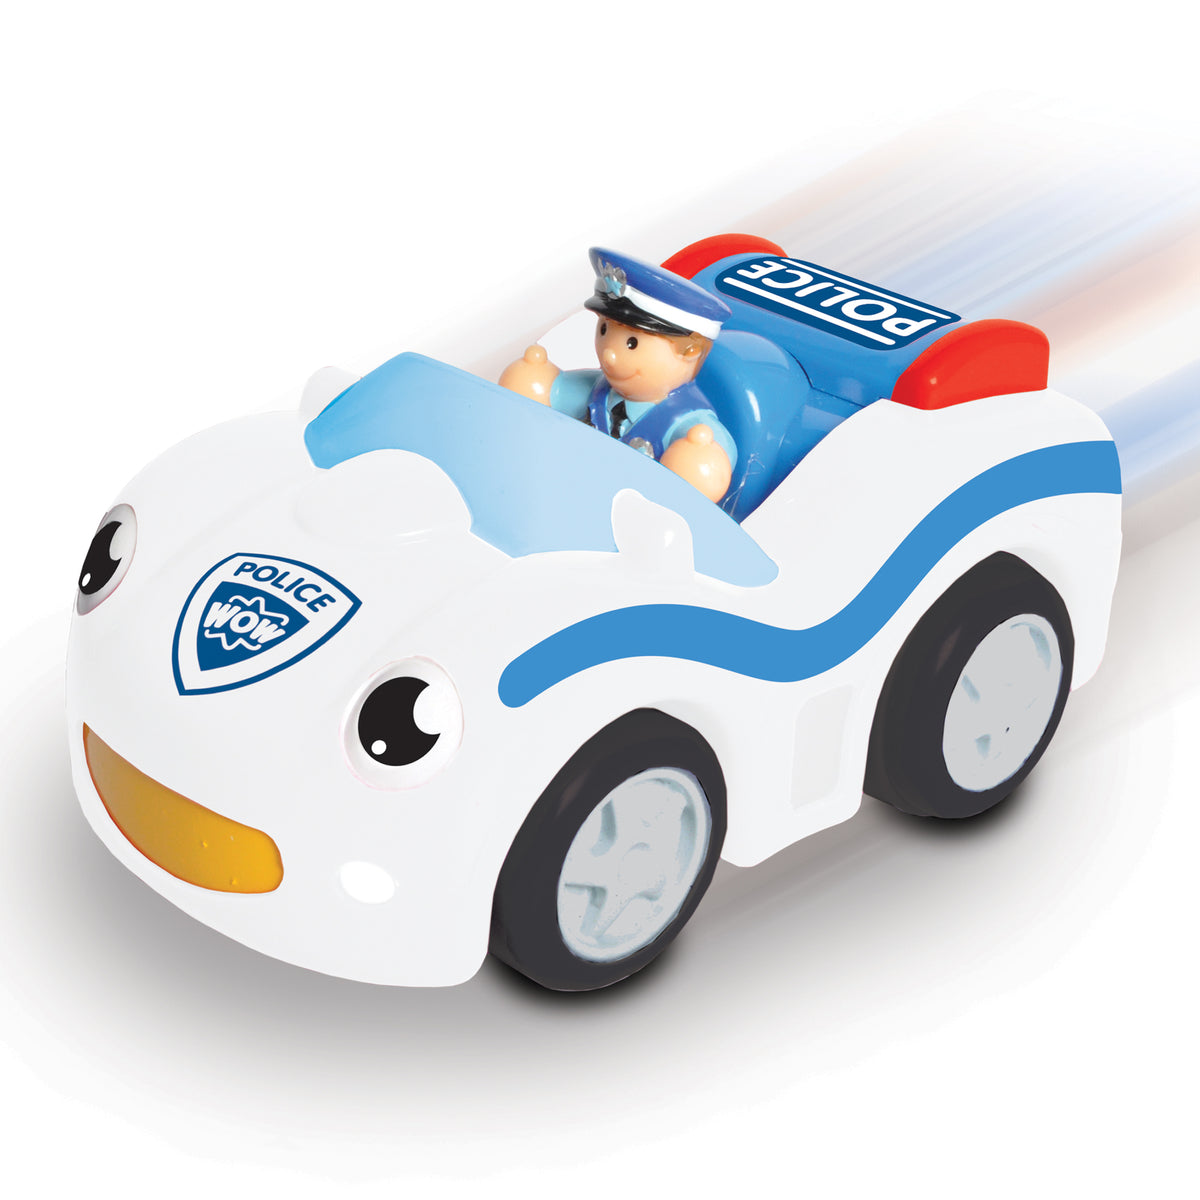 WOW Toys Cop Car Cody